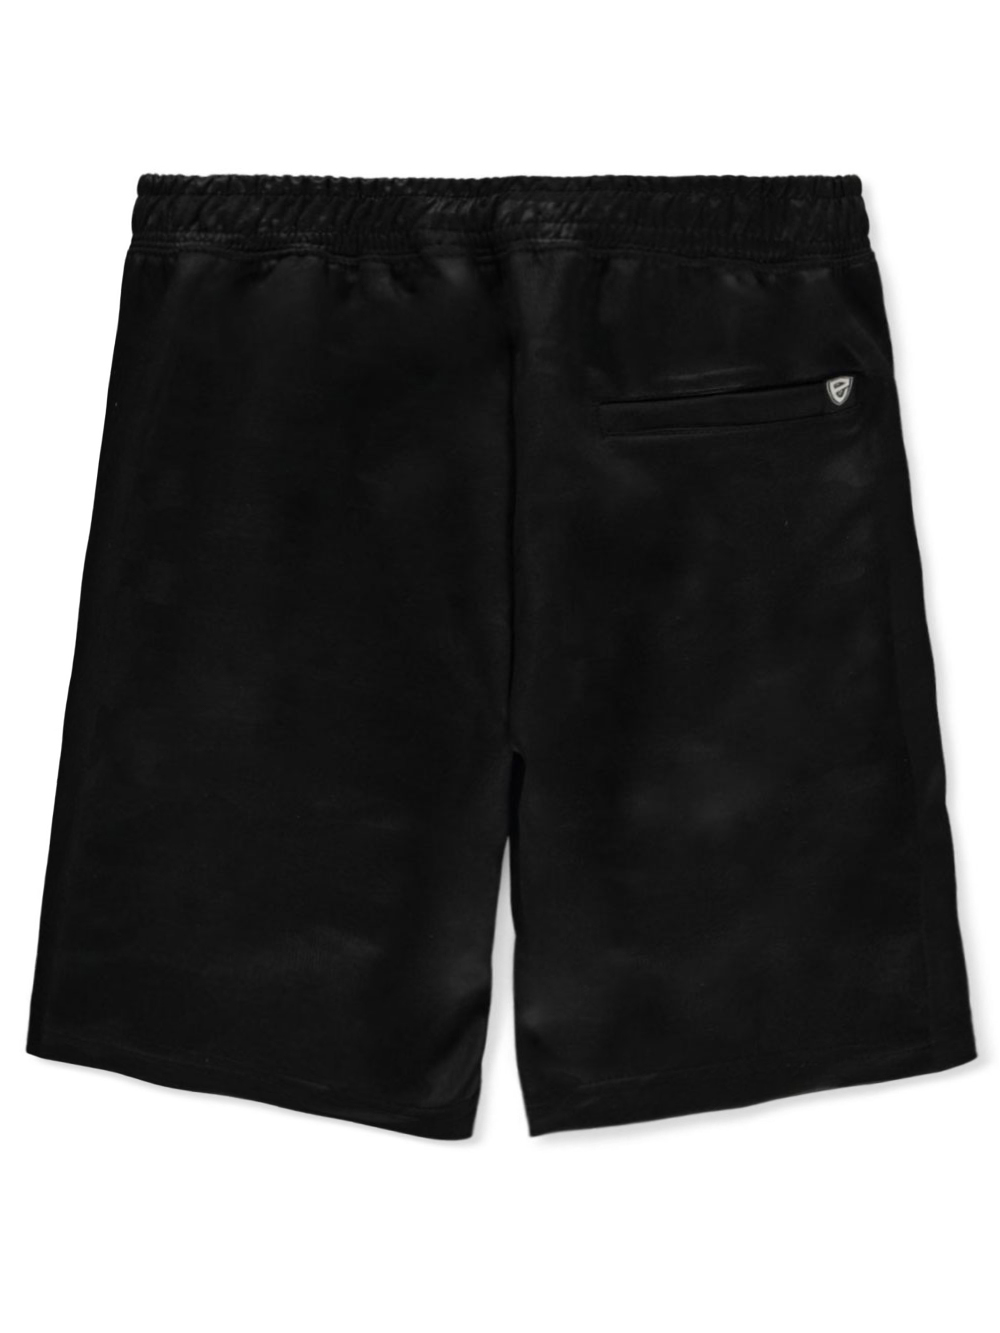 Black Camo Shorts